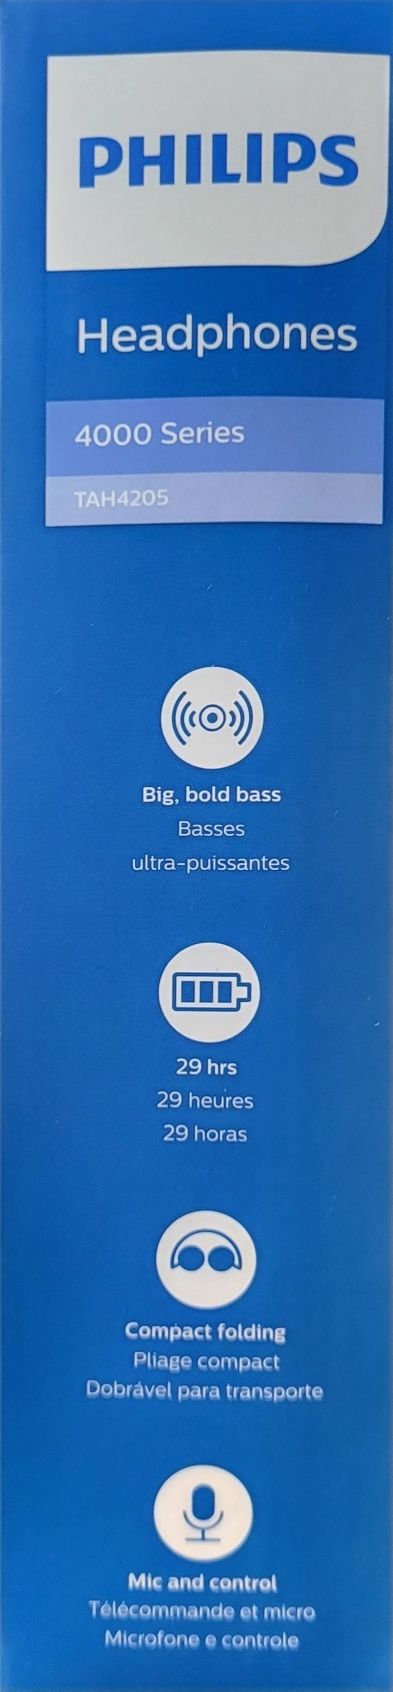 Casti Wireless Philips 4000 Series negre